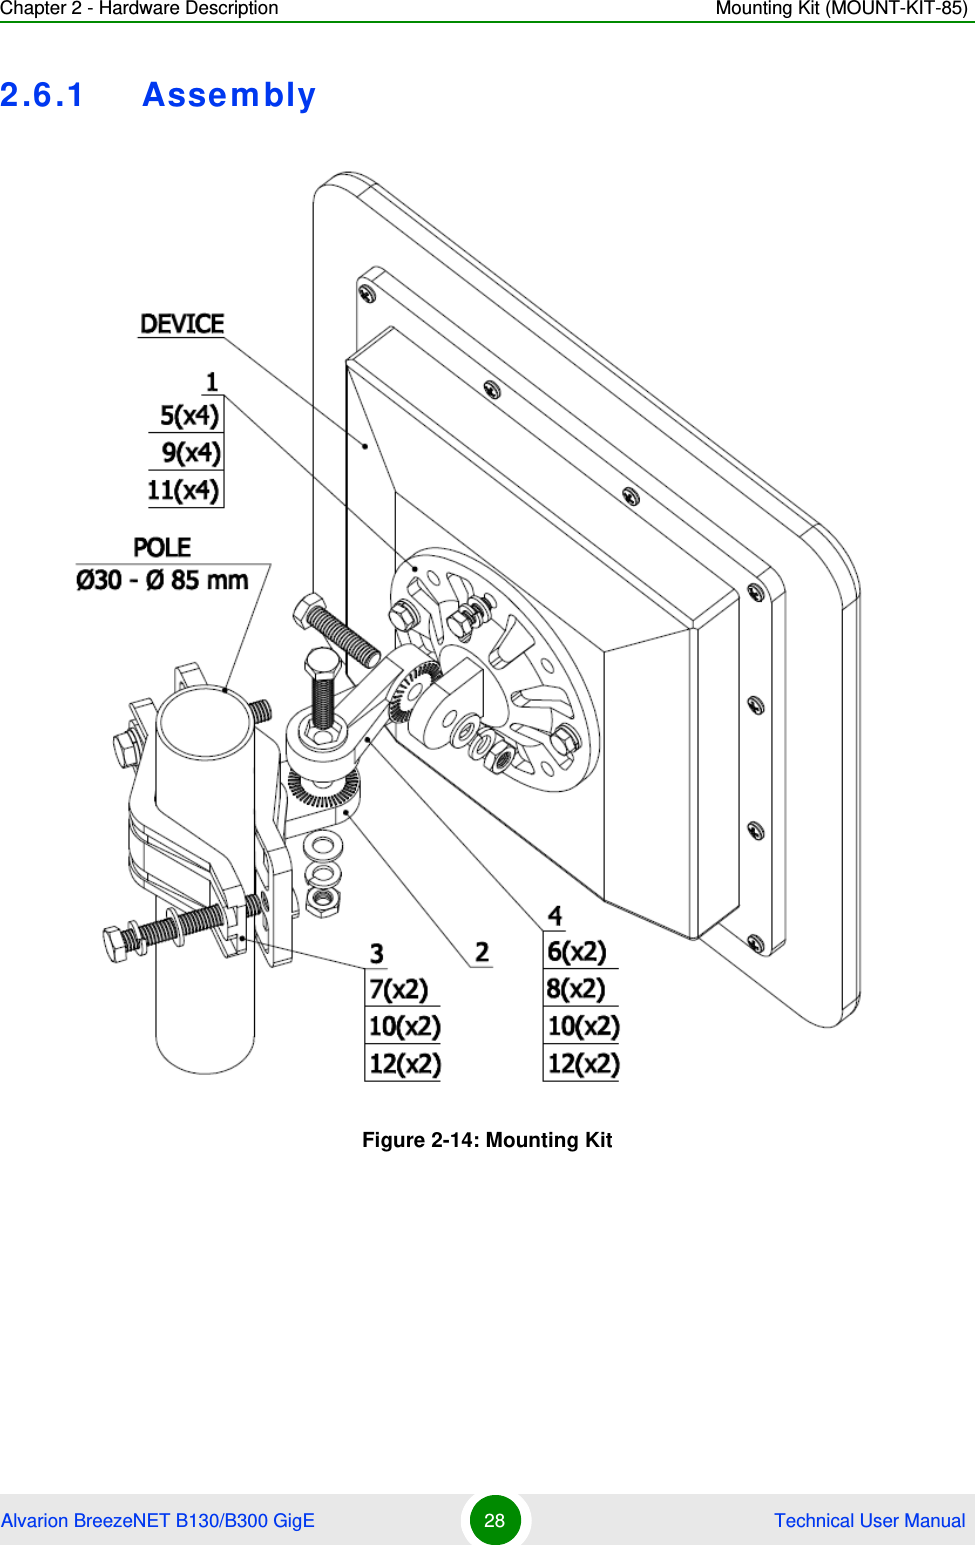 Chapter 2 - Hardware Description Mounting Kit (MOUNT-KIT-85)Alvarion BreezeNET B130/B300 GigE 28  Technical User Manual2.6.1 AssemblyFigure 2-14: Mounting Kit